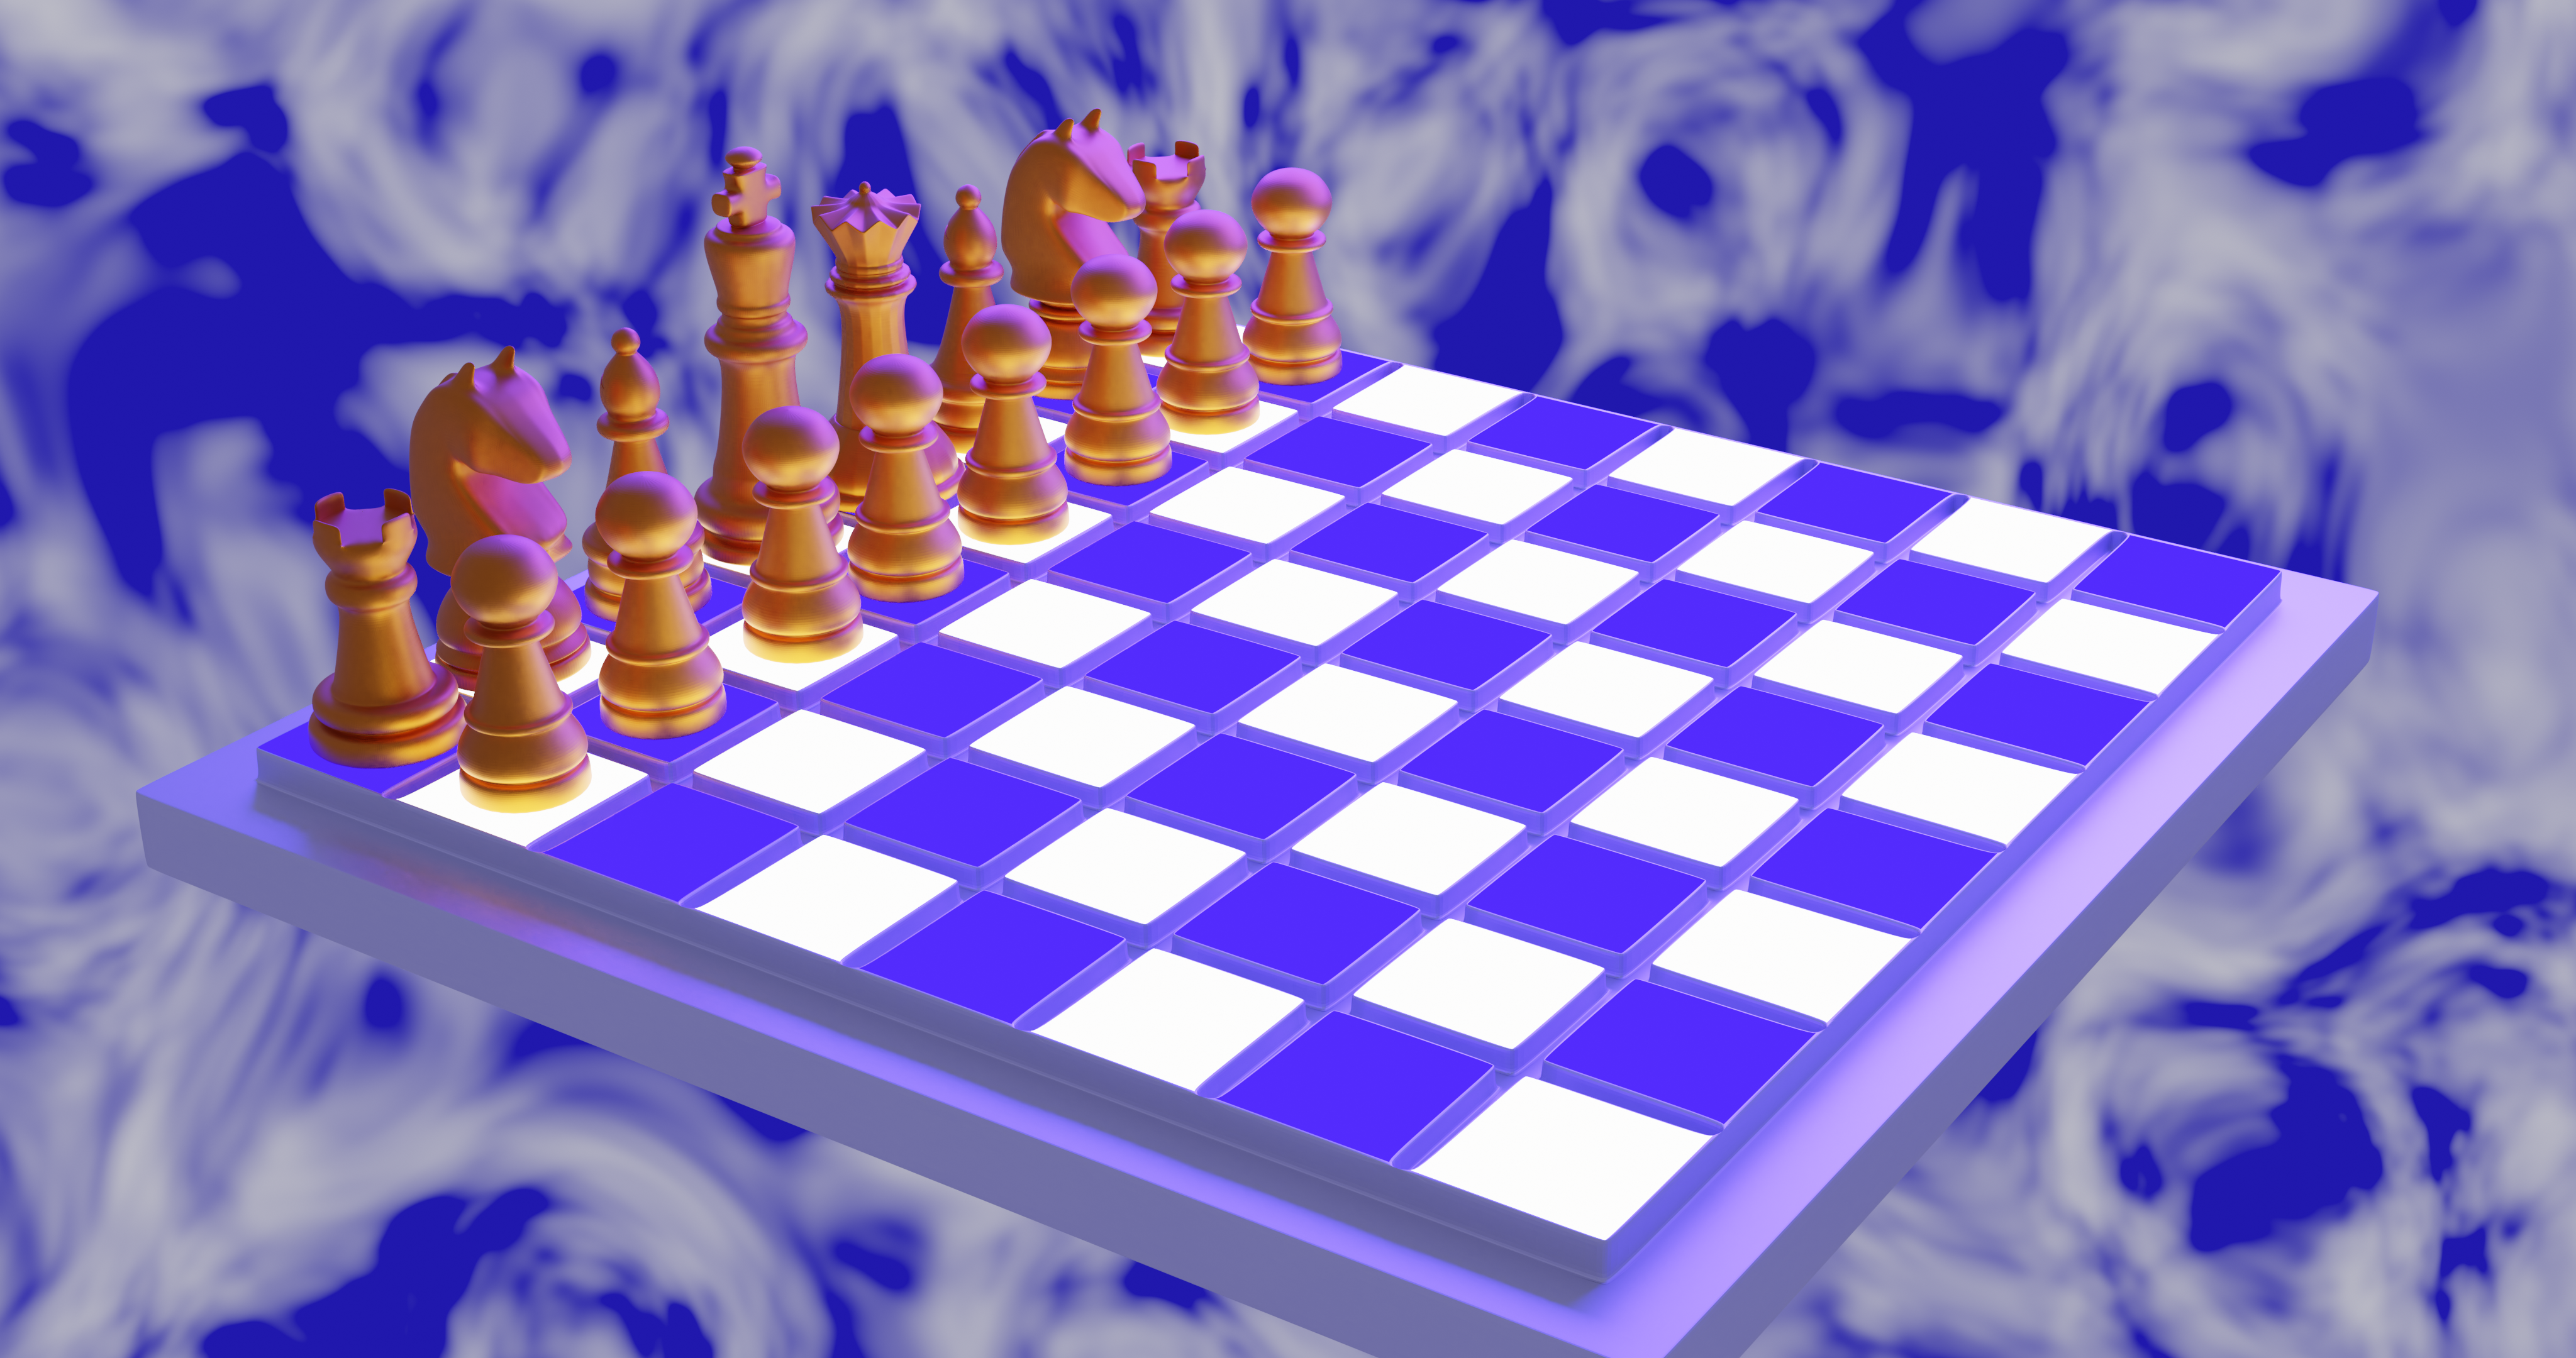 Download wallpaper 3840x2400 chess, chessboard, figures, 3d 4k ultra hd  16:10 hd background